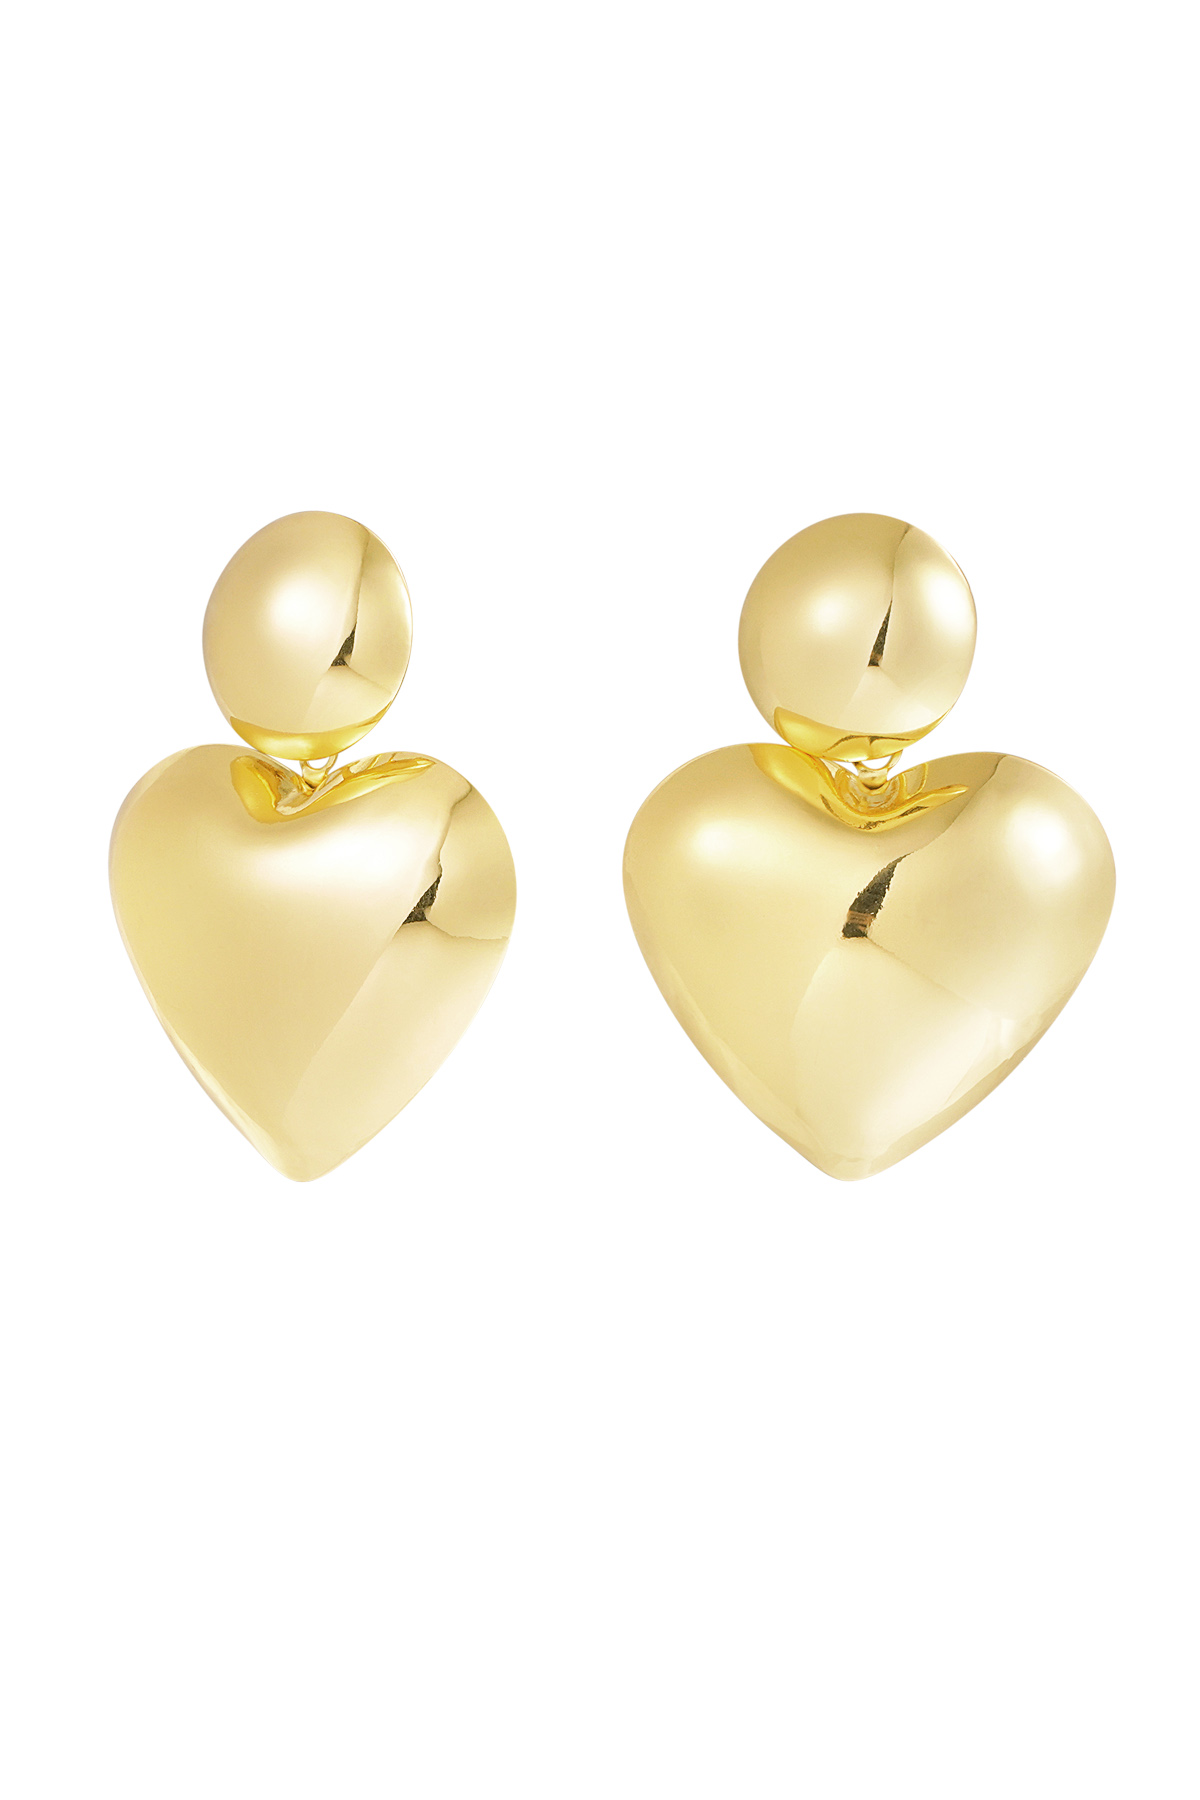 Earrings heart with dot - gold